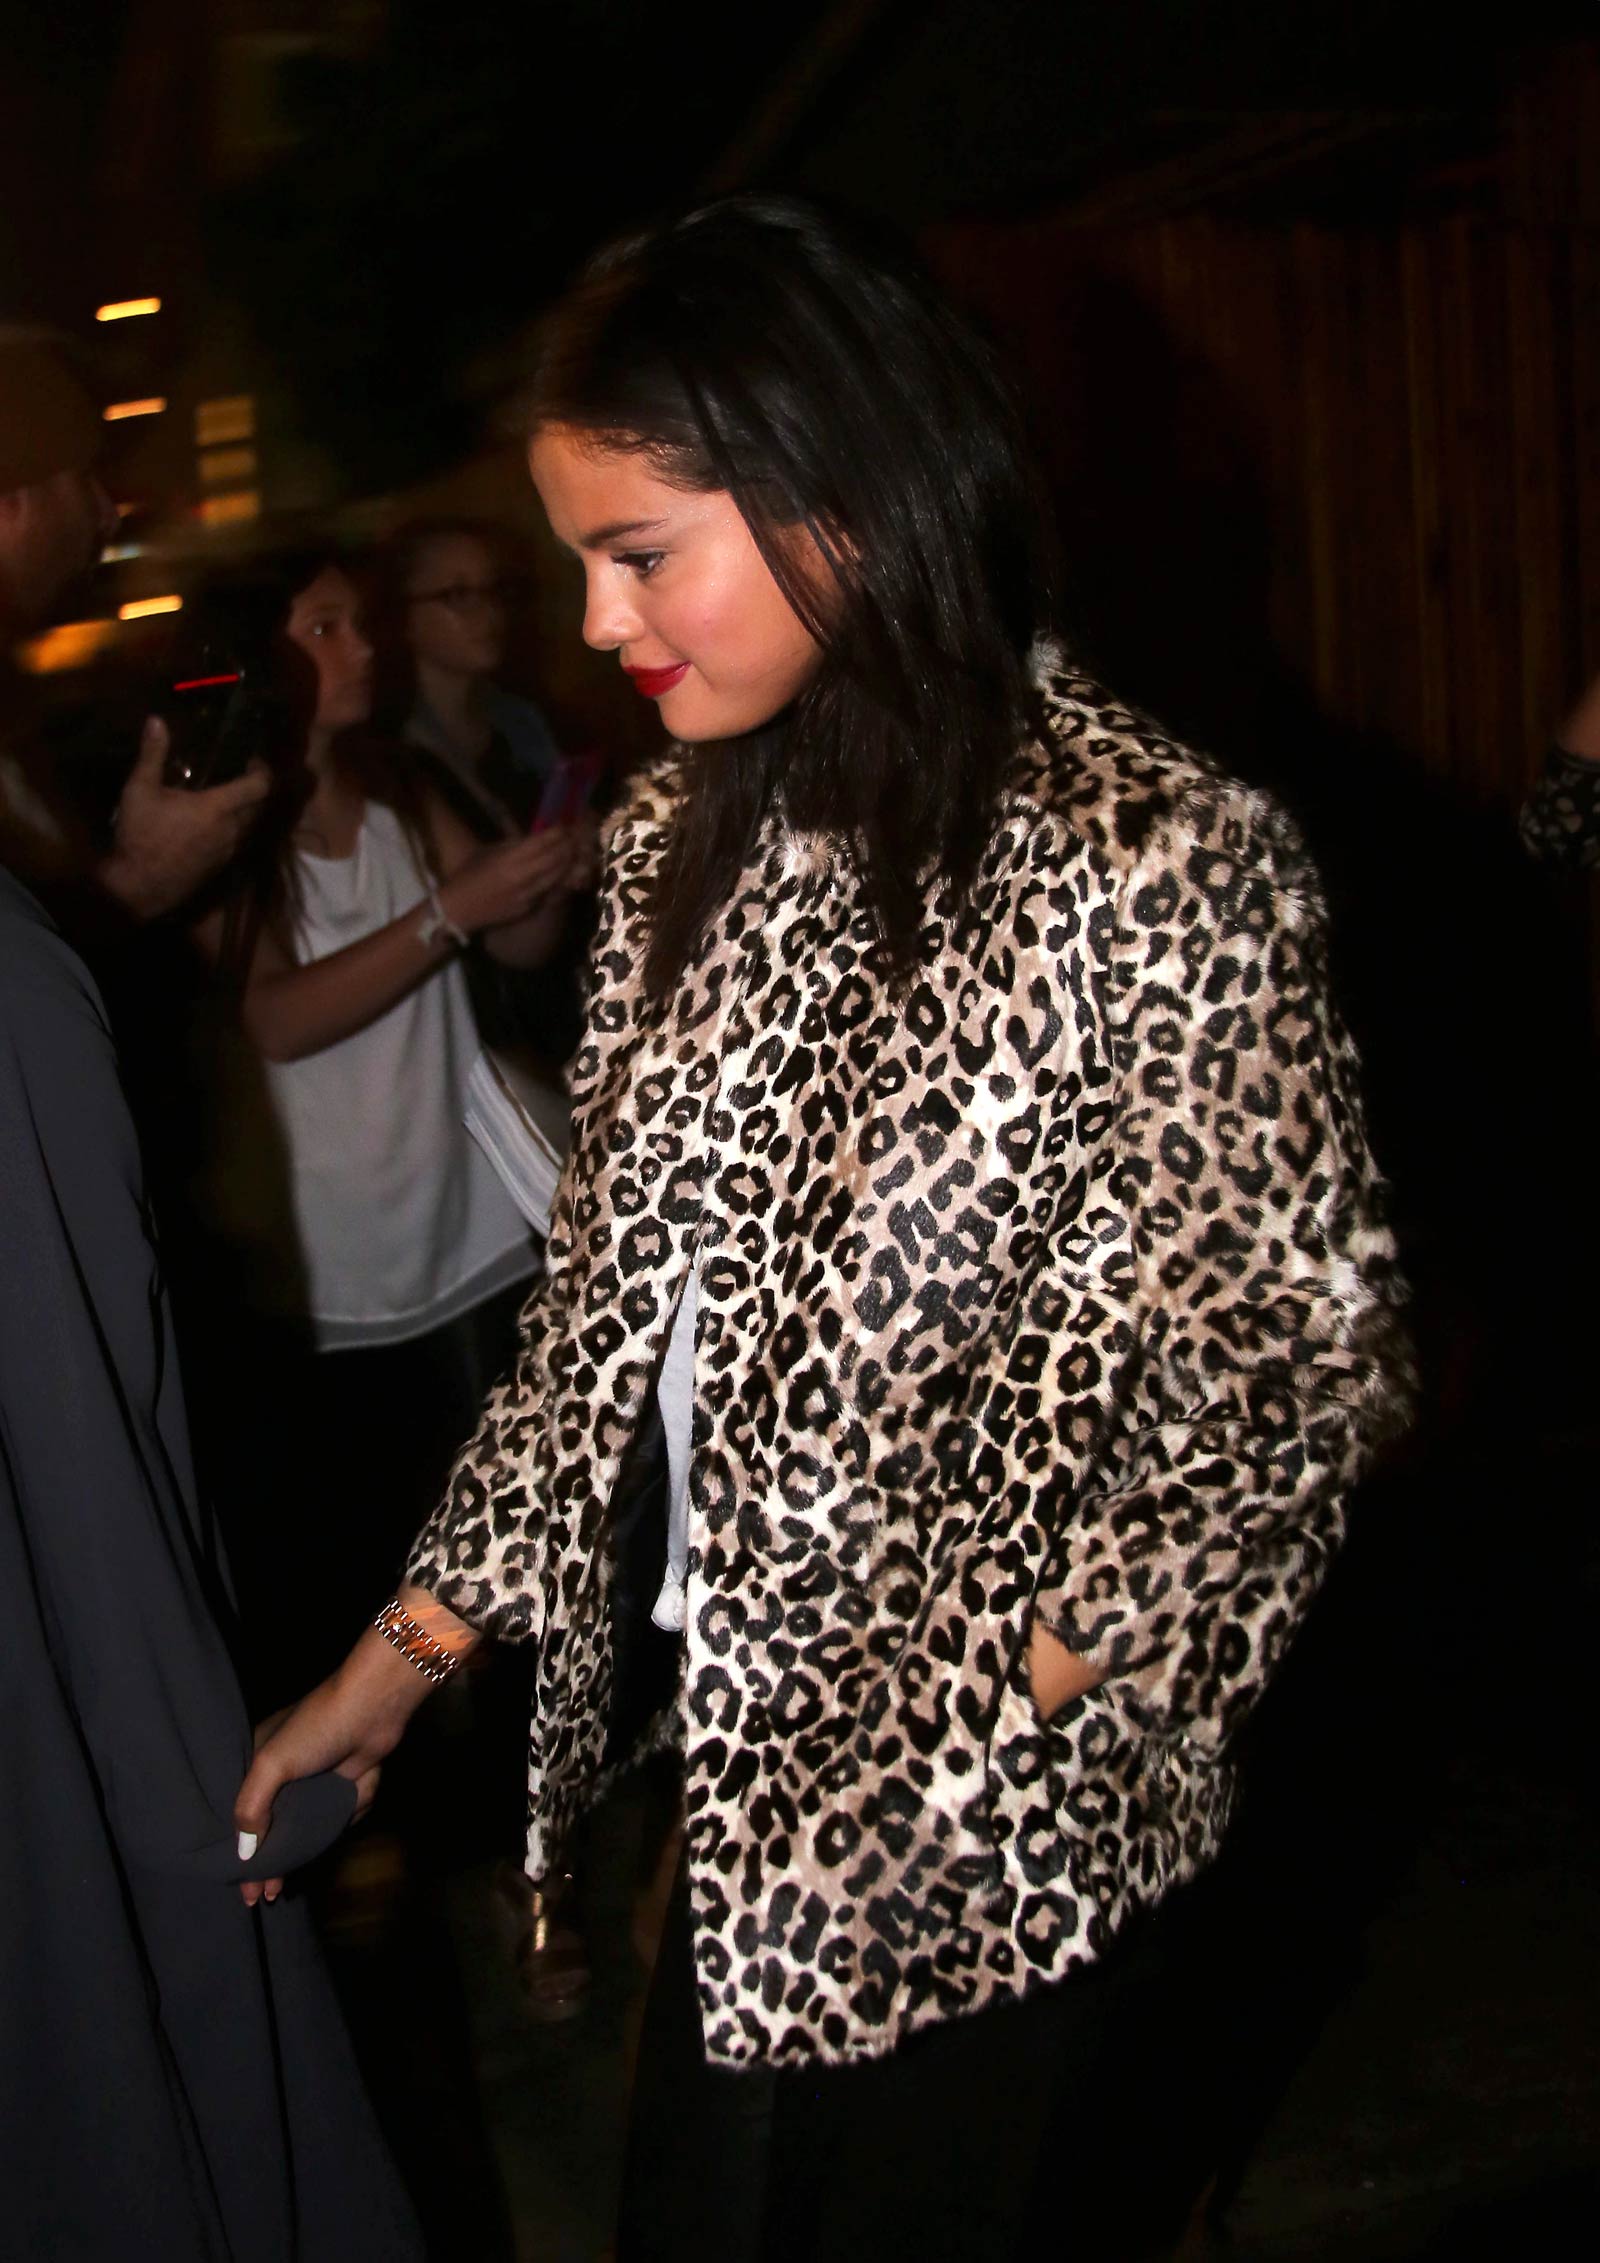 Selena Gomez & Francia Raisa leaving The Nice Guy Restaurant